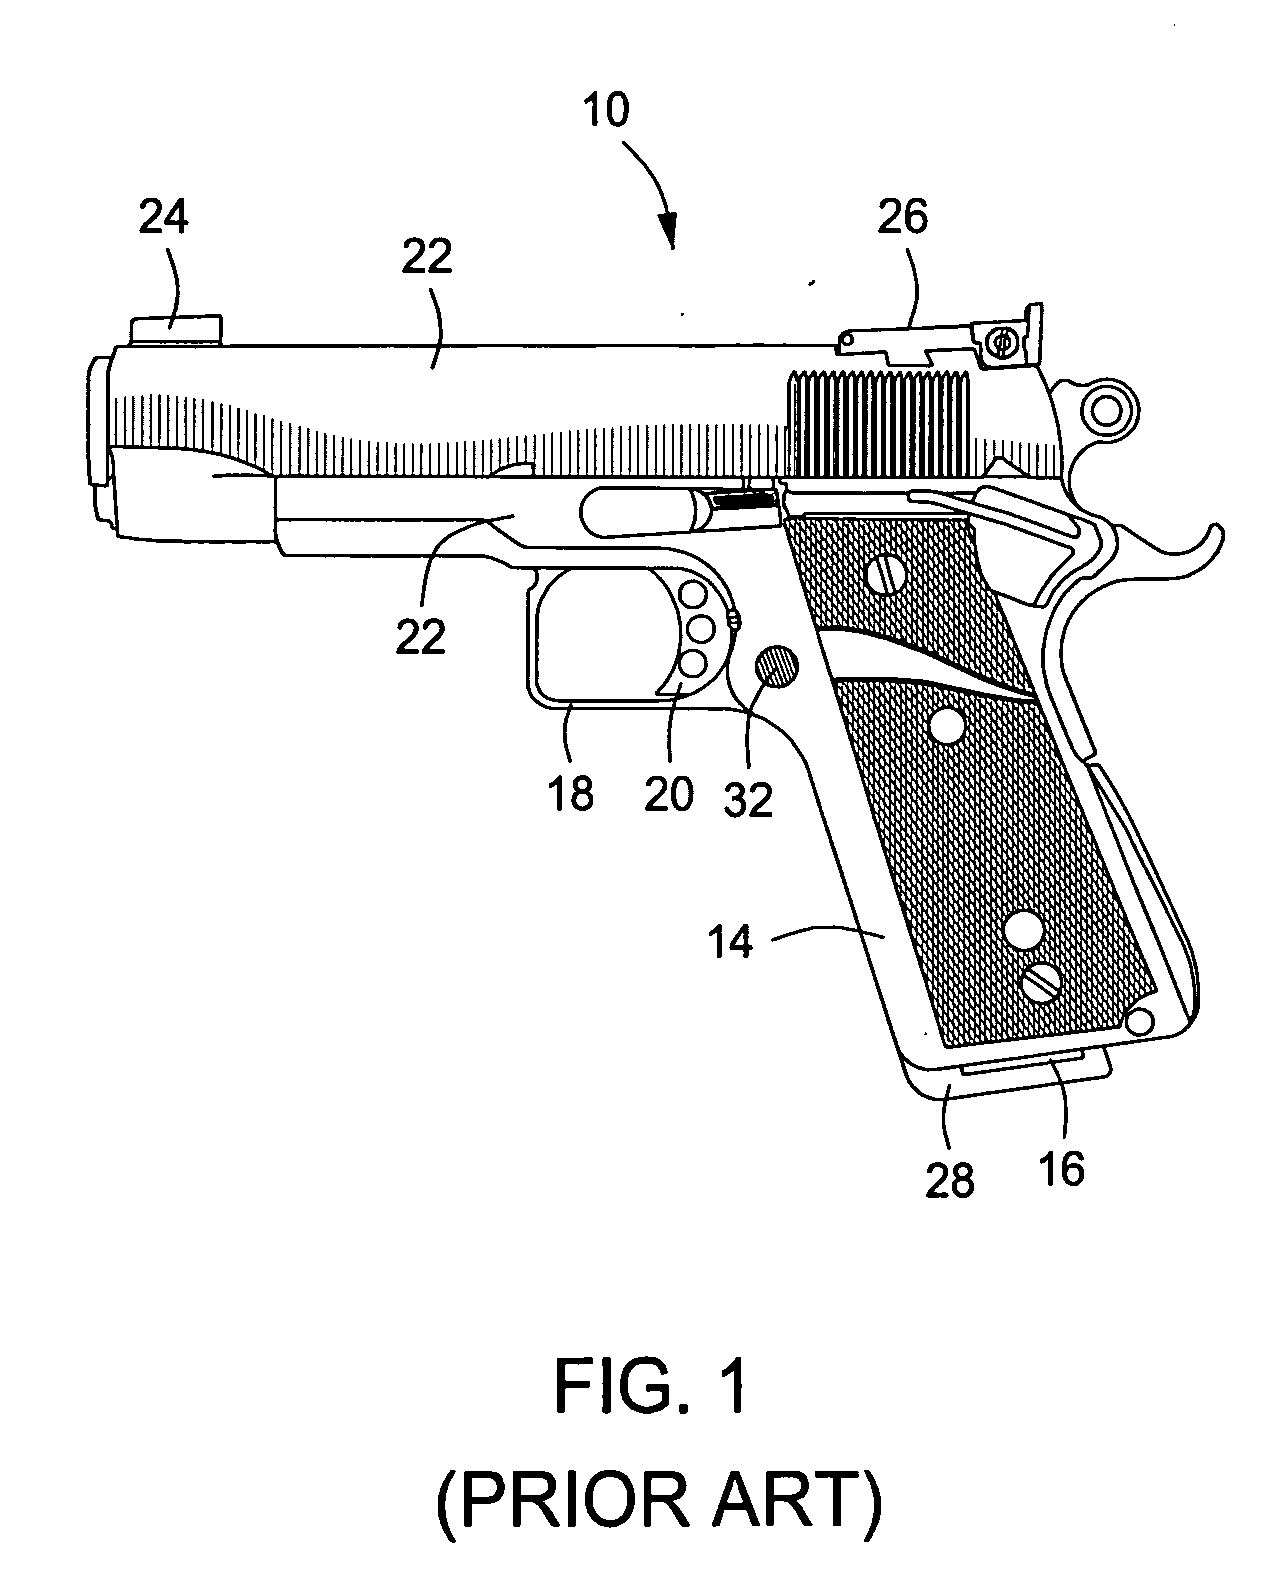 Firearm having universal magazine release mechanism